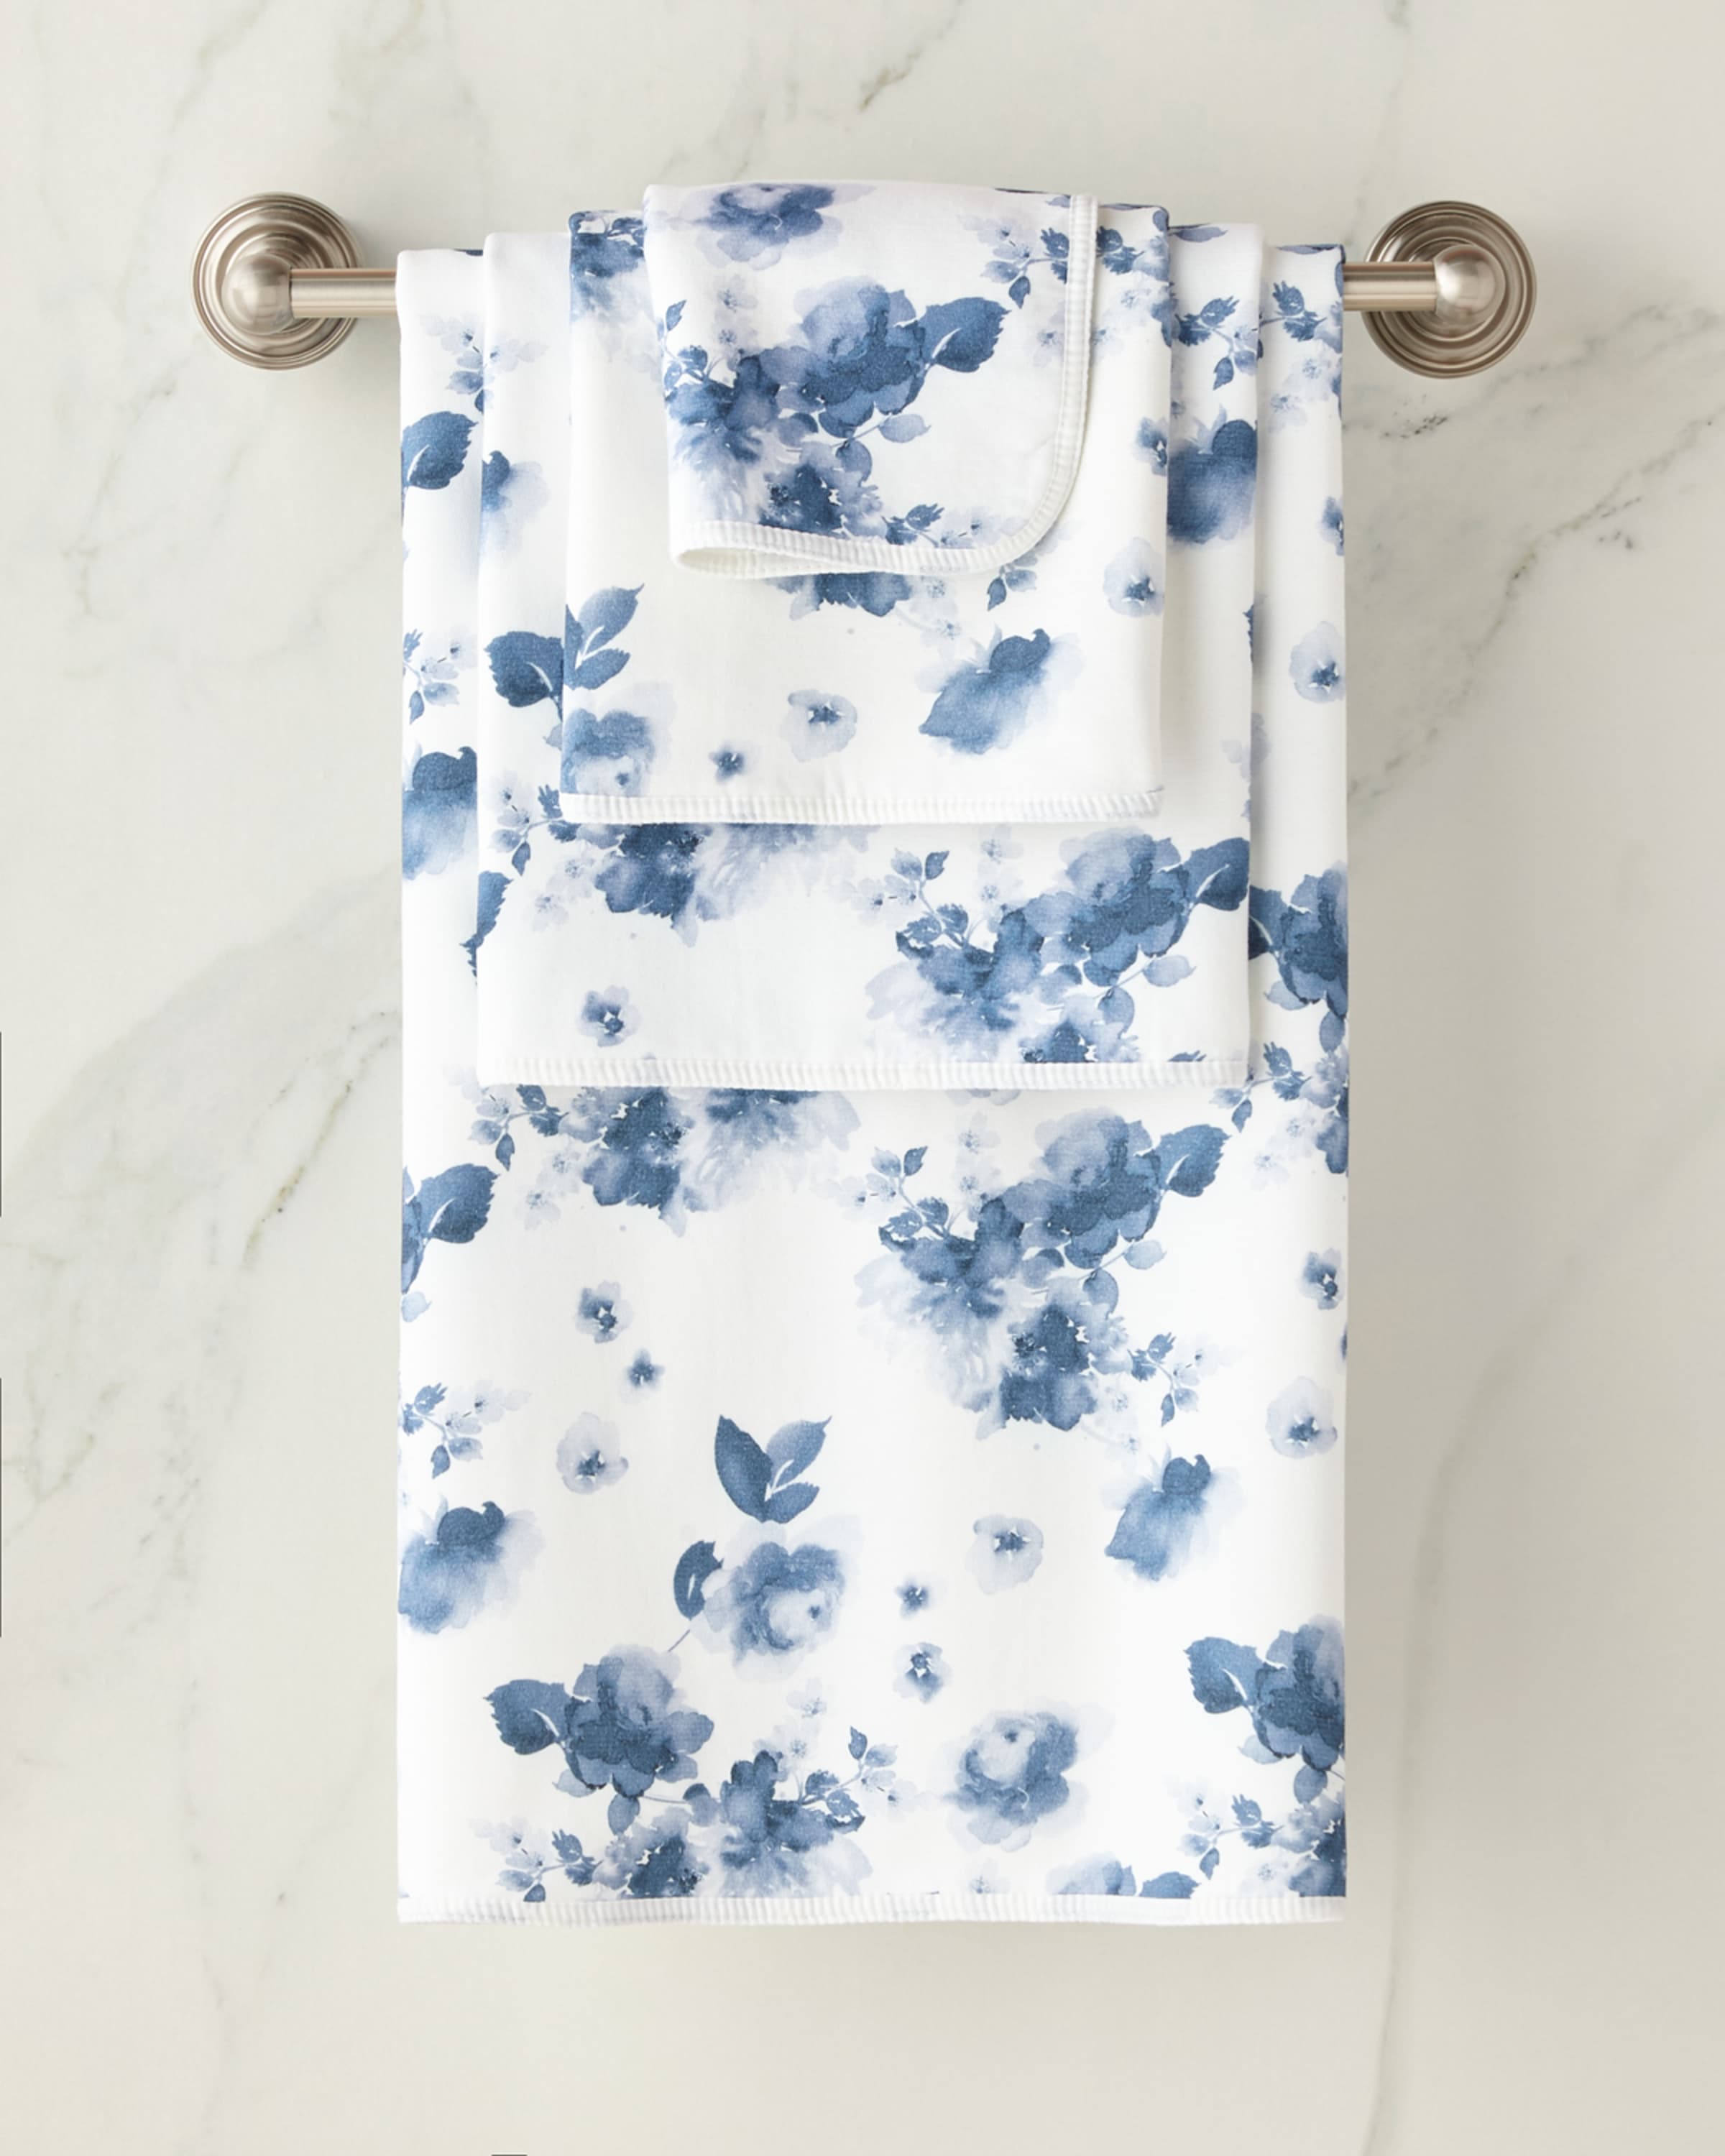 Graccioza Long Double Loop Luxury Bath Towels (Blush)